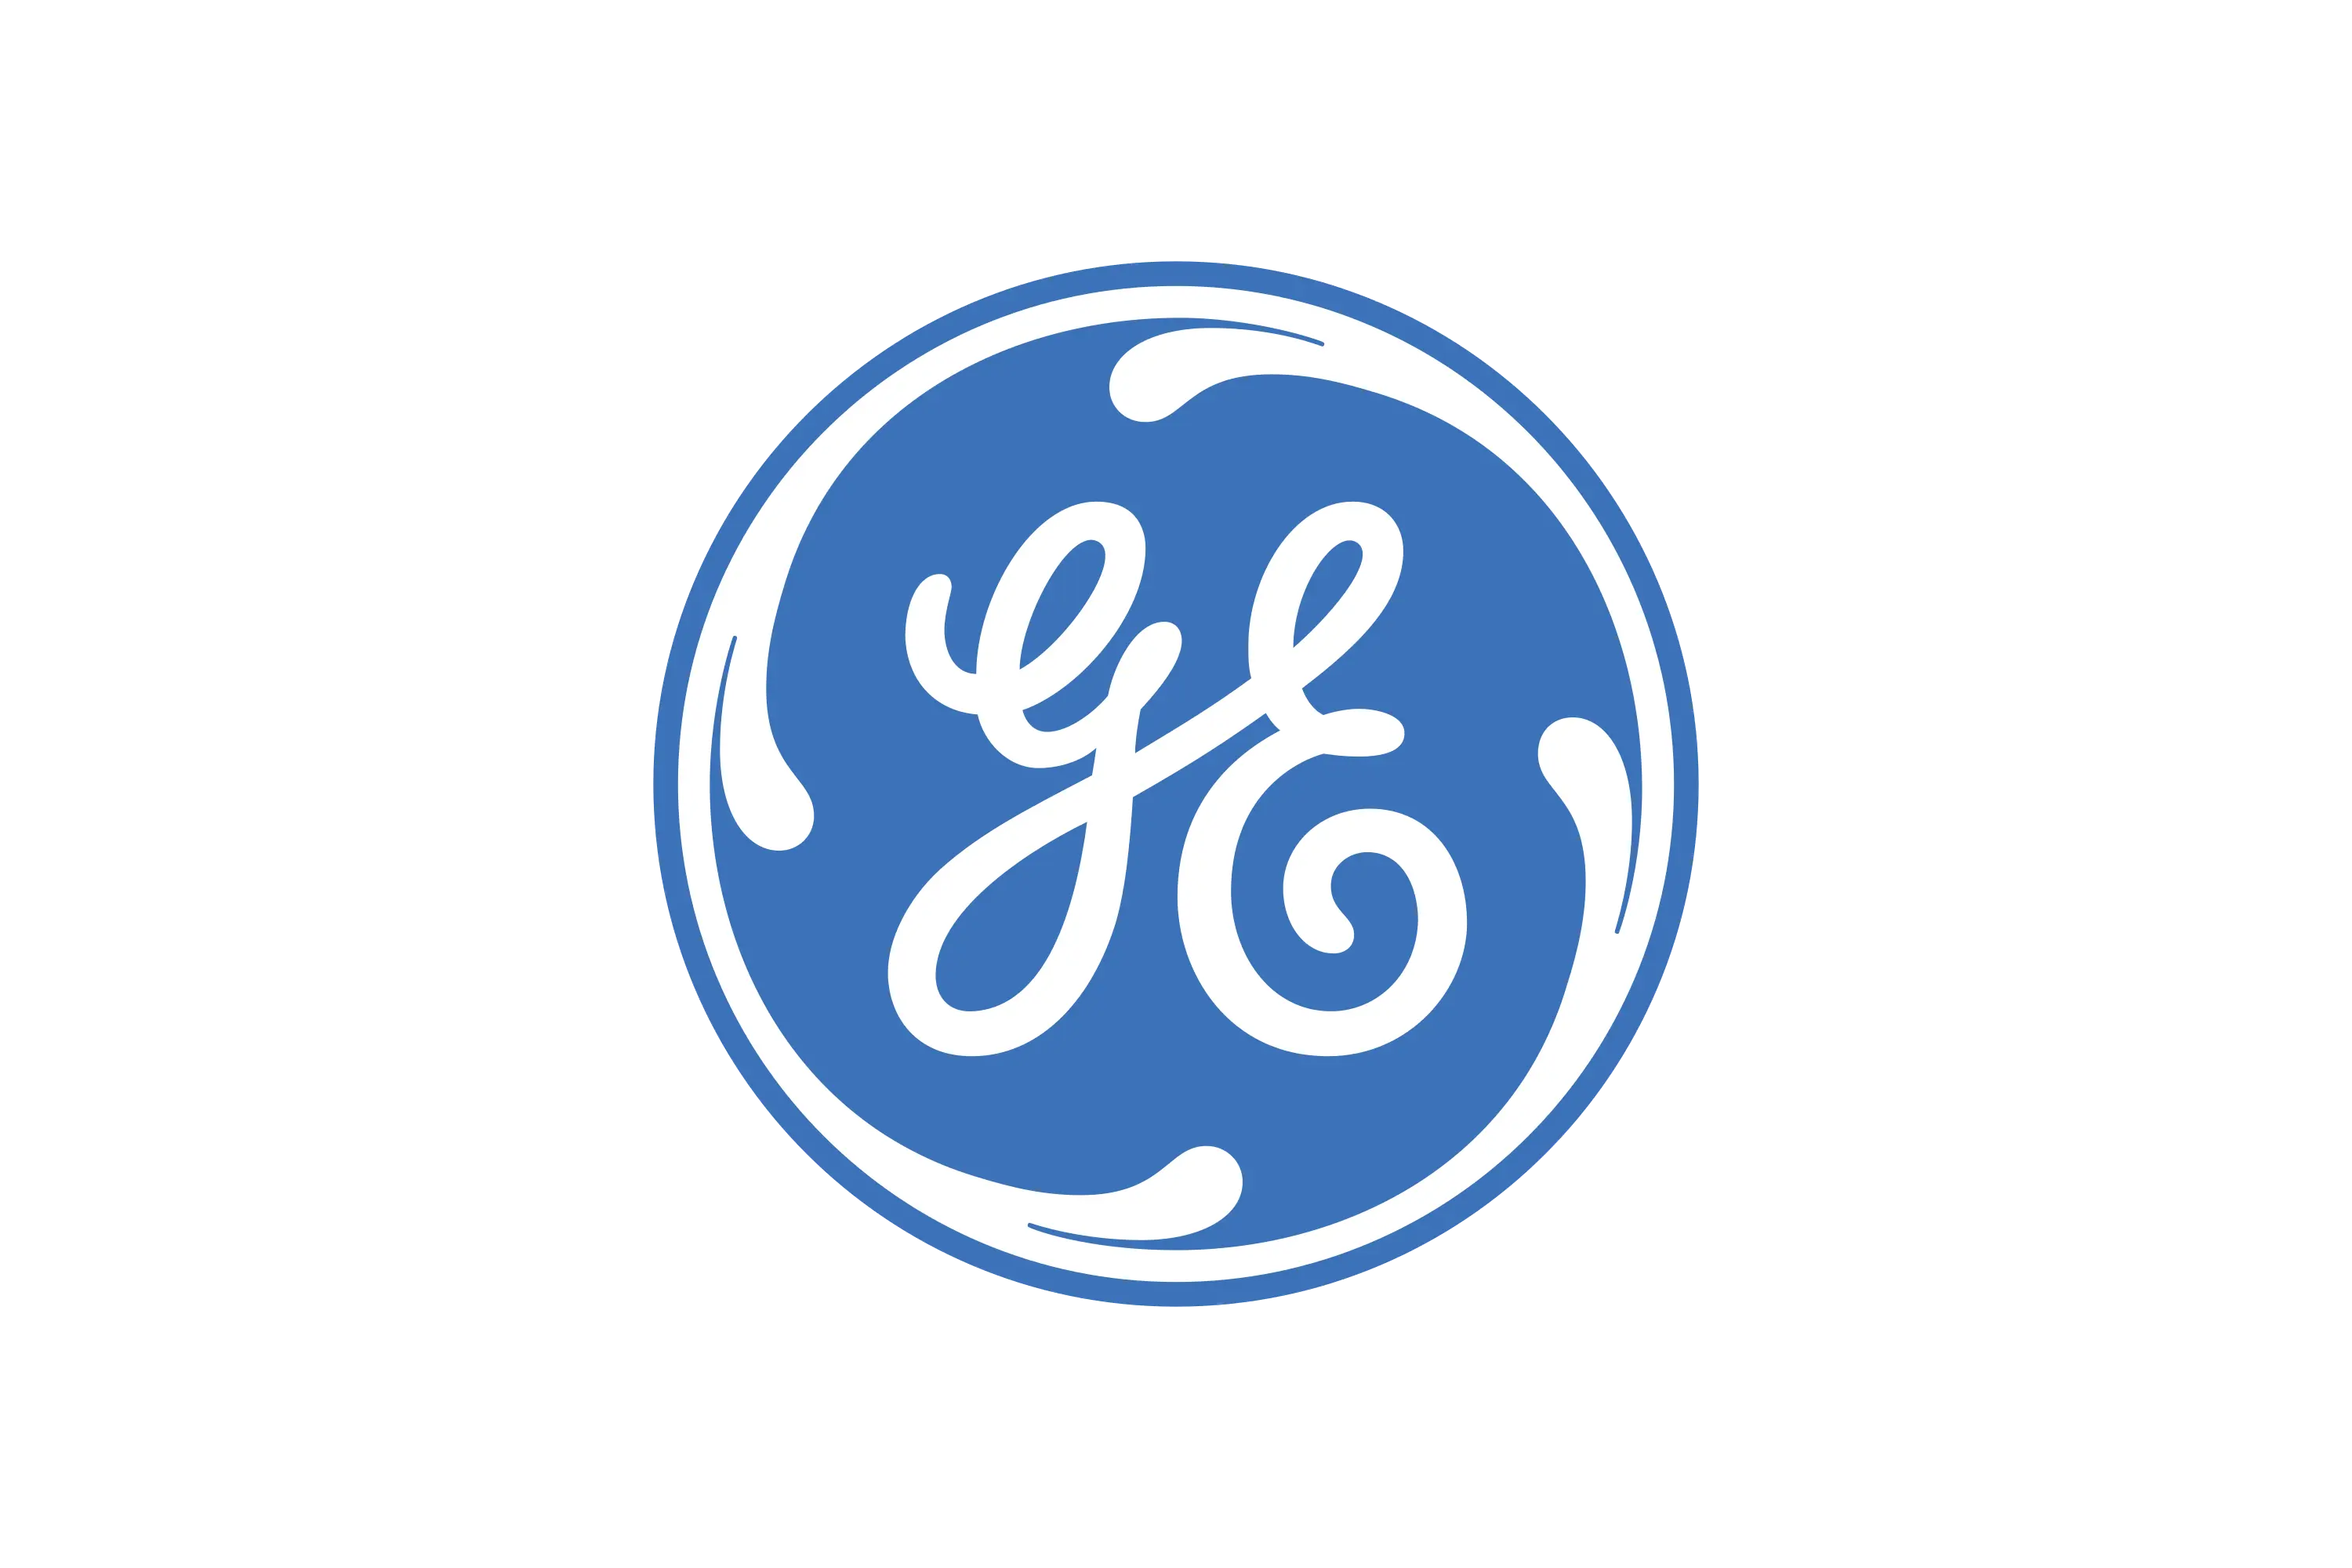 general_electric-logo-1671445